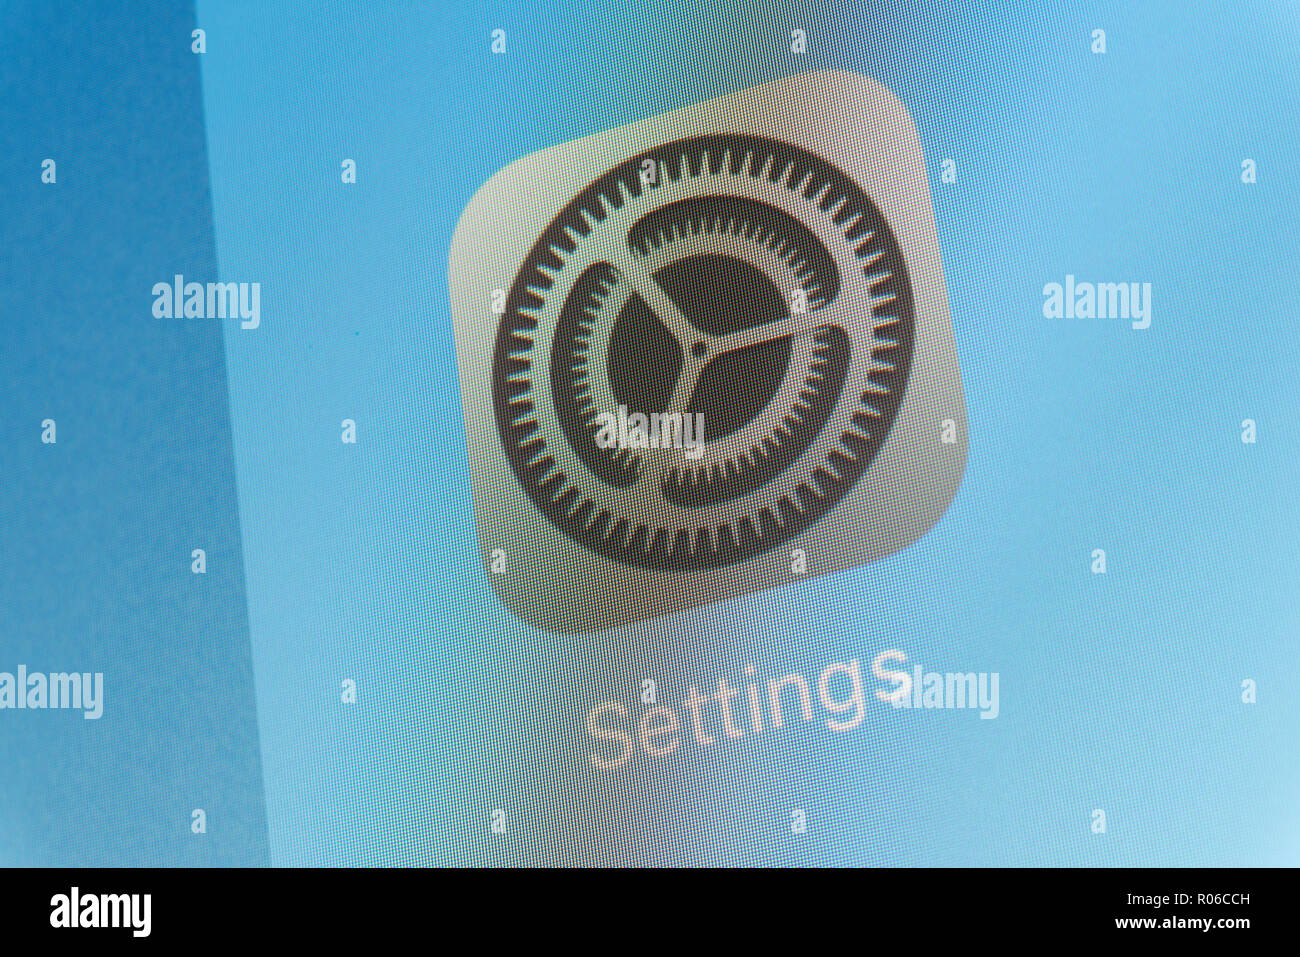 Apple Settings on cellphone screen Stock Photo